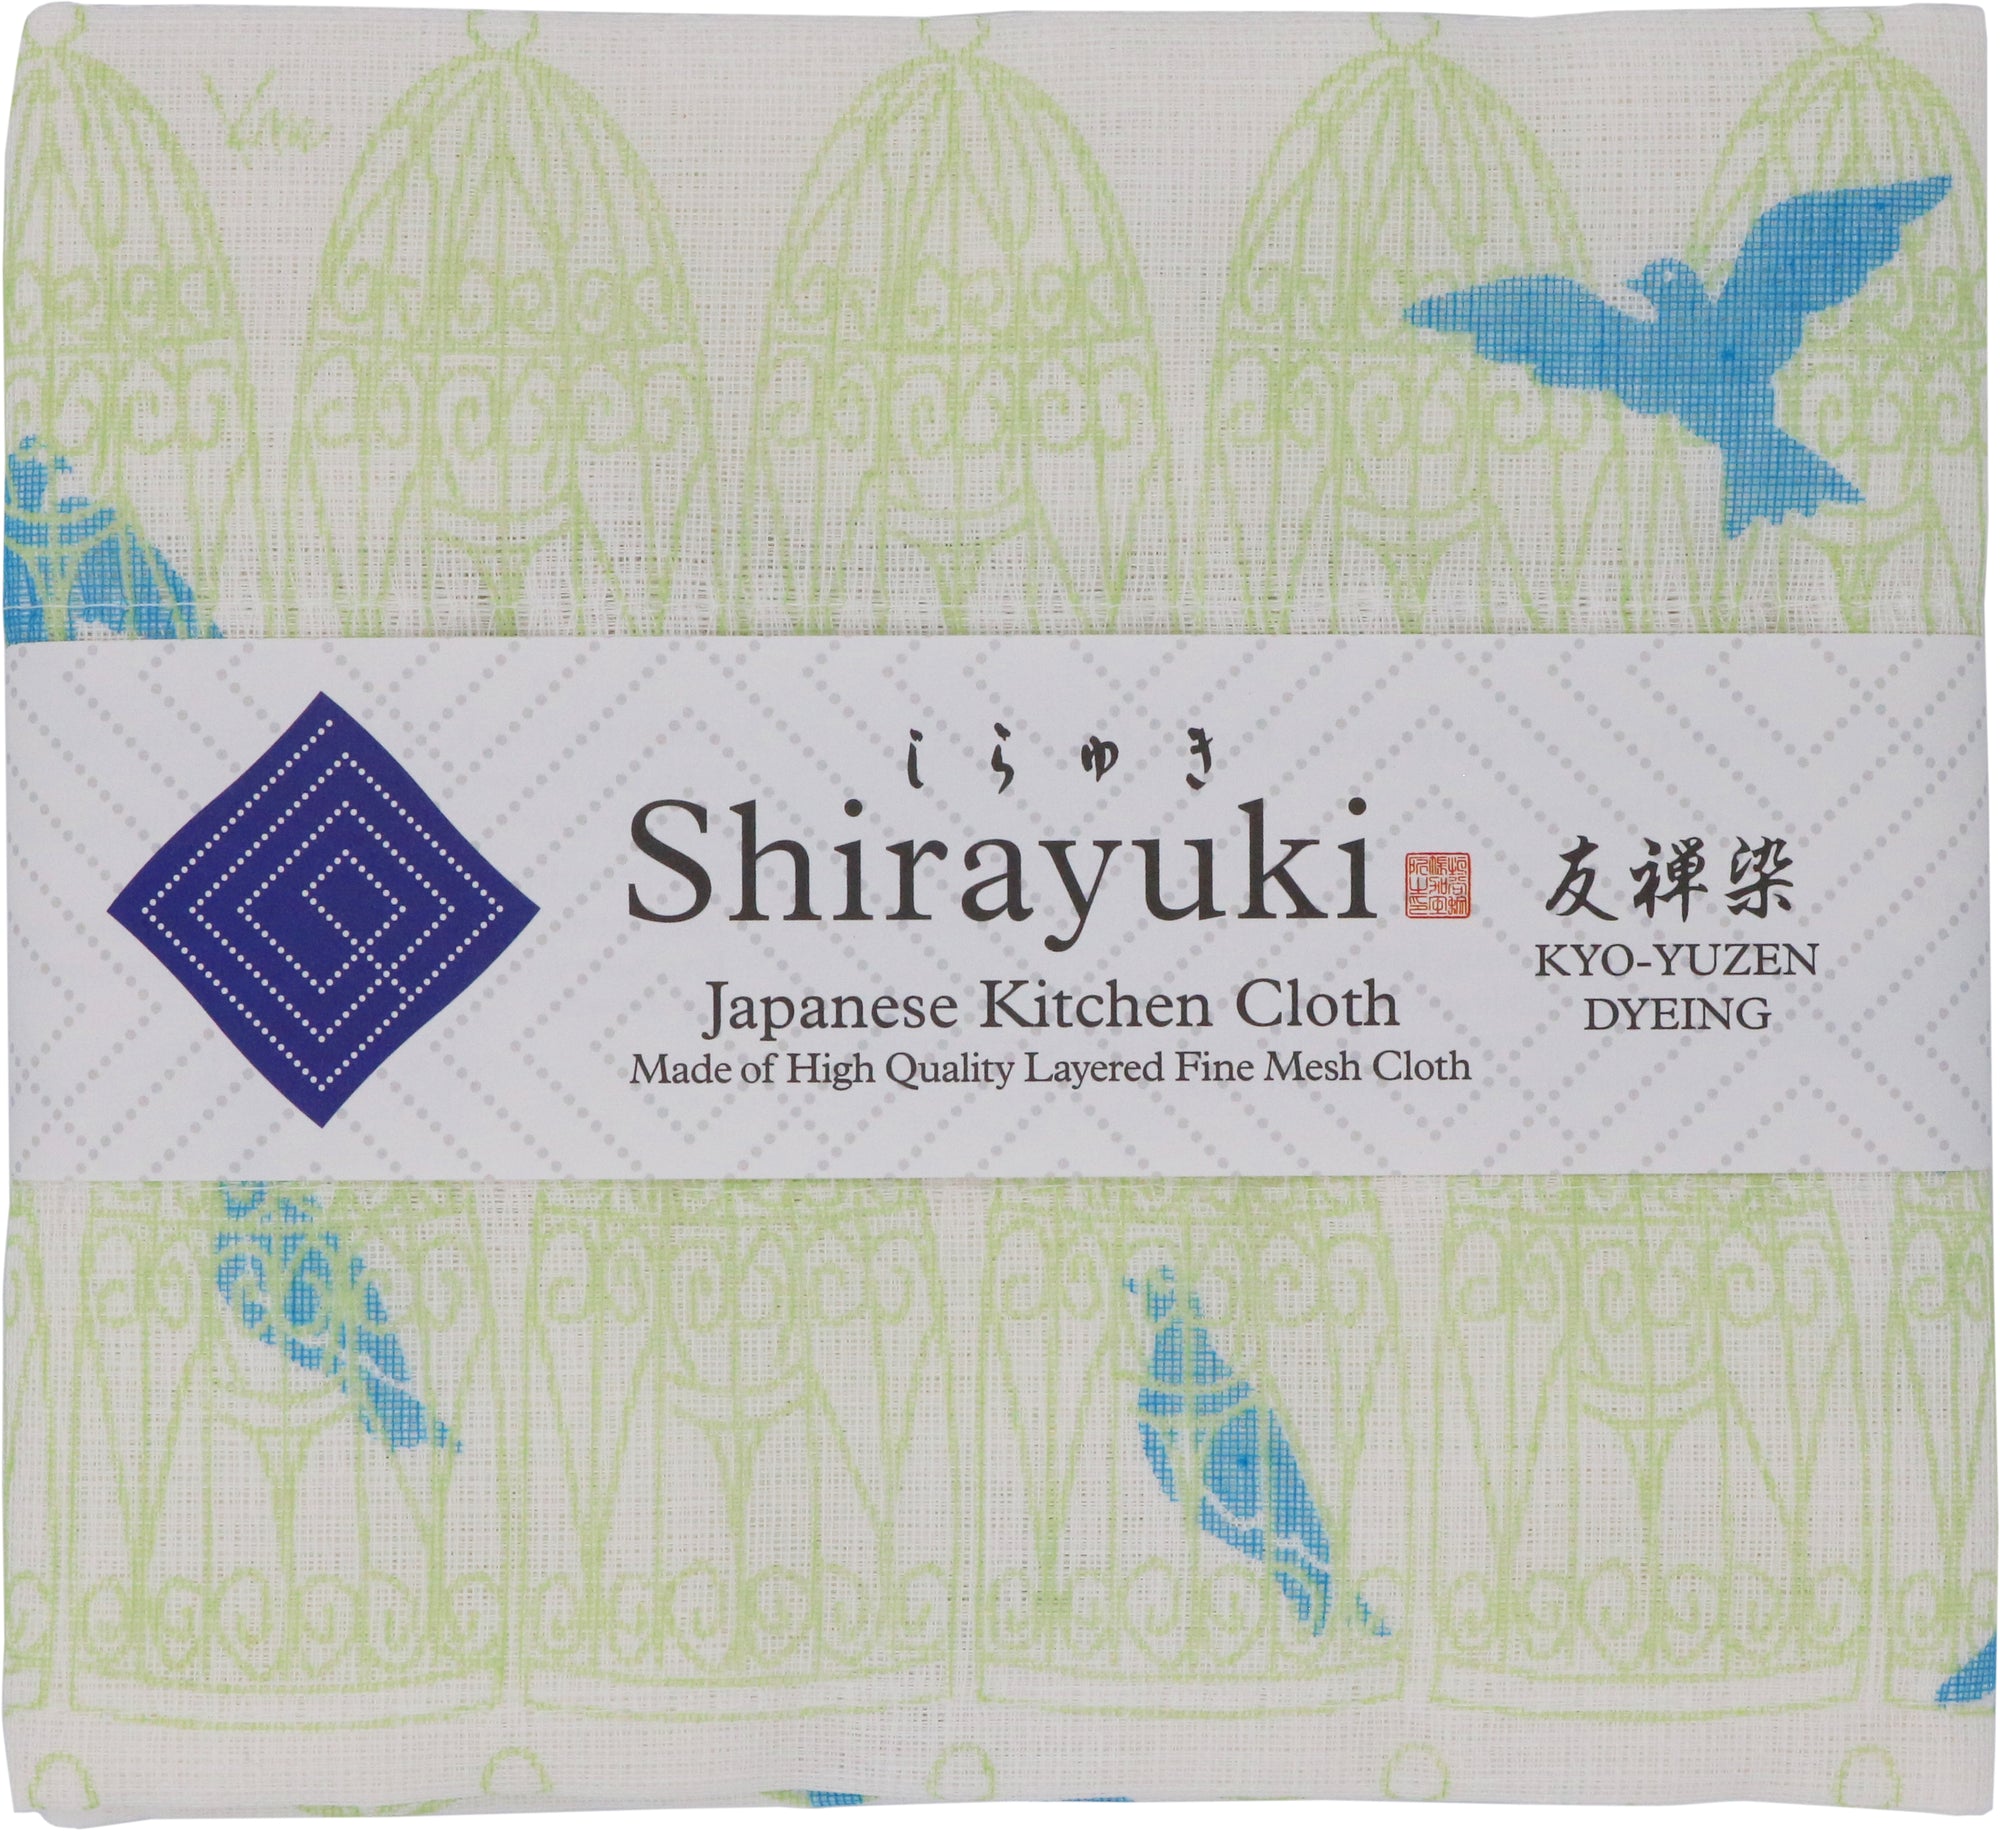 Shirayuki Japanese Kitchen Cloth. Made of Fine Layered Mesh Cloth. Dish Wipe, Table Wipe. Made in Japan (Green, Blue Birds)